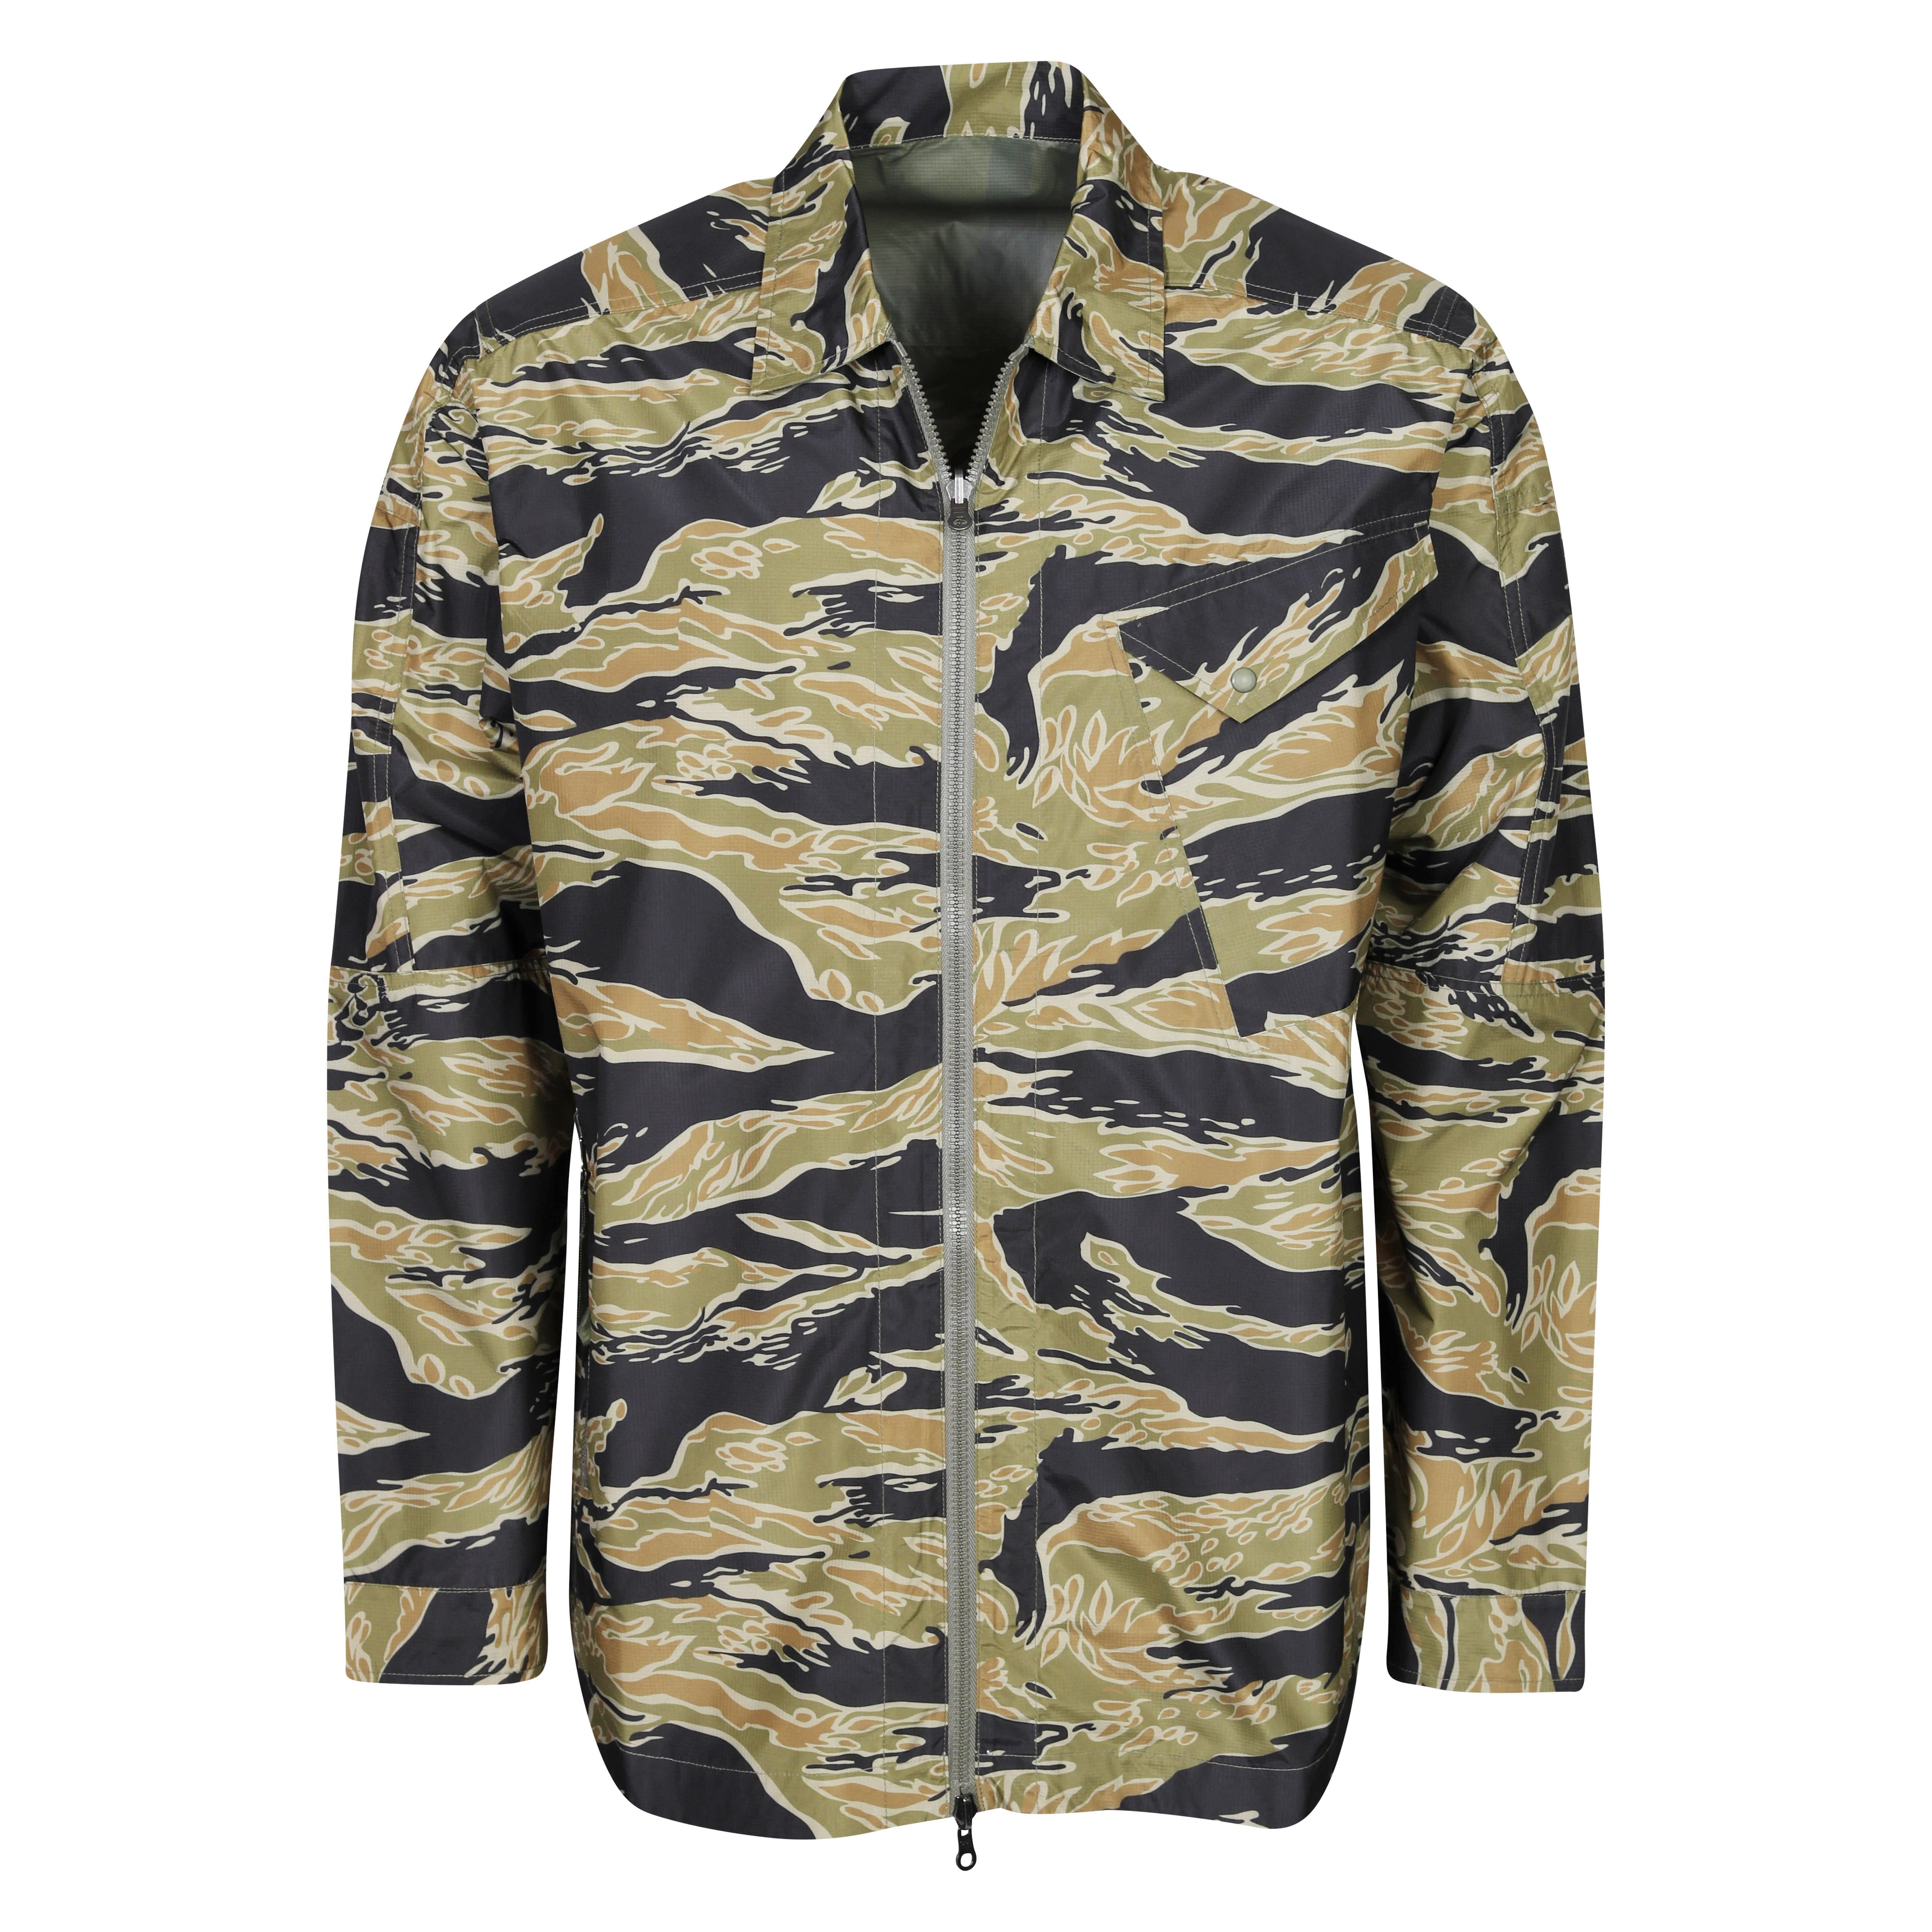 Maharishi Camo Reversible Packaway Shirt Jacket in Tigerstripe Olive M